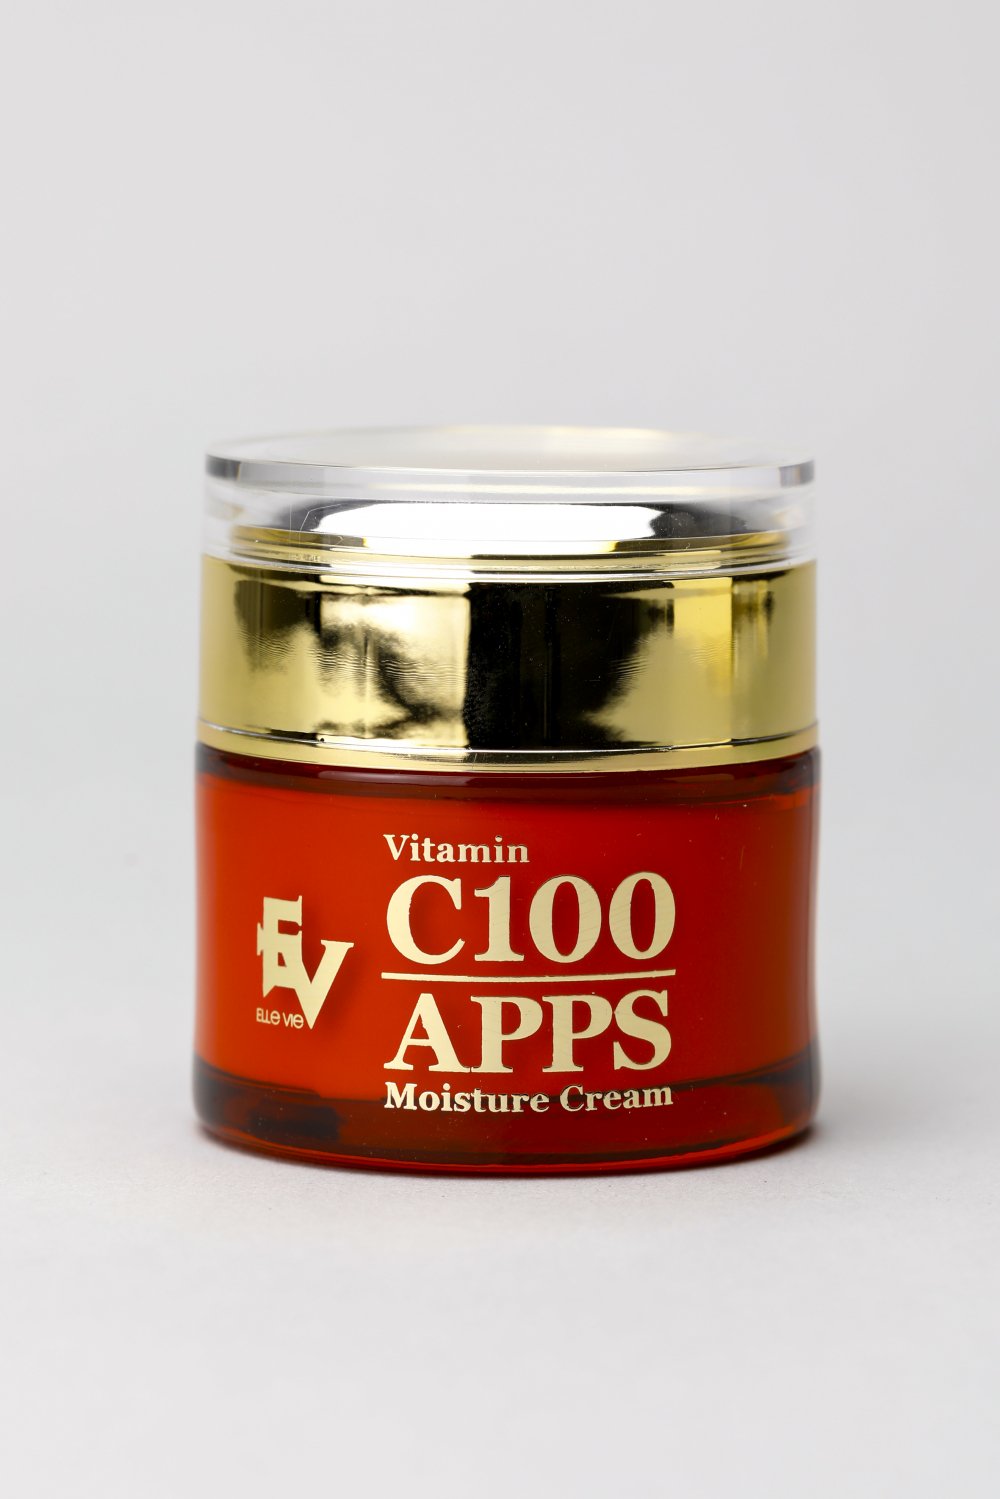 Vitamin C 100 Apps Cream 原宿にある化粧品会社 株式会社トリコロール Tricolore